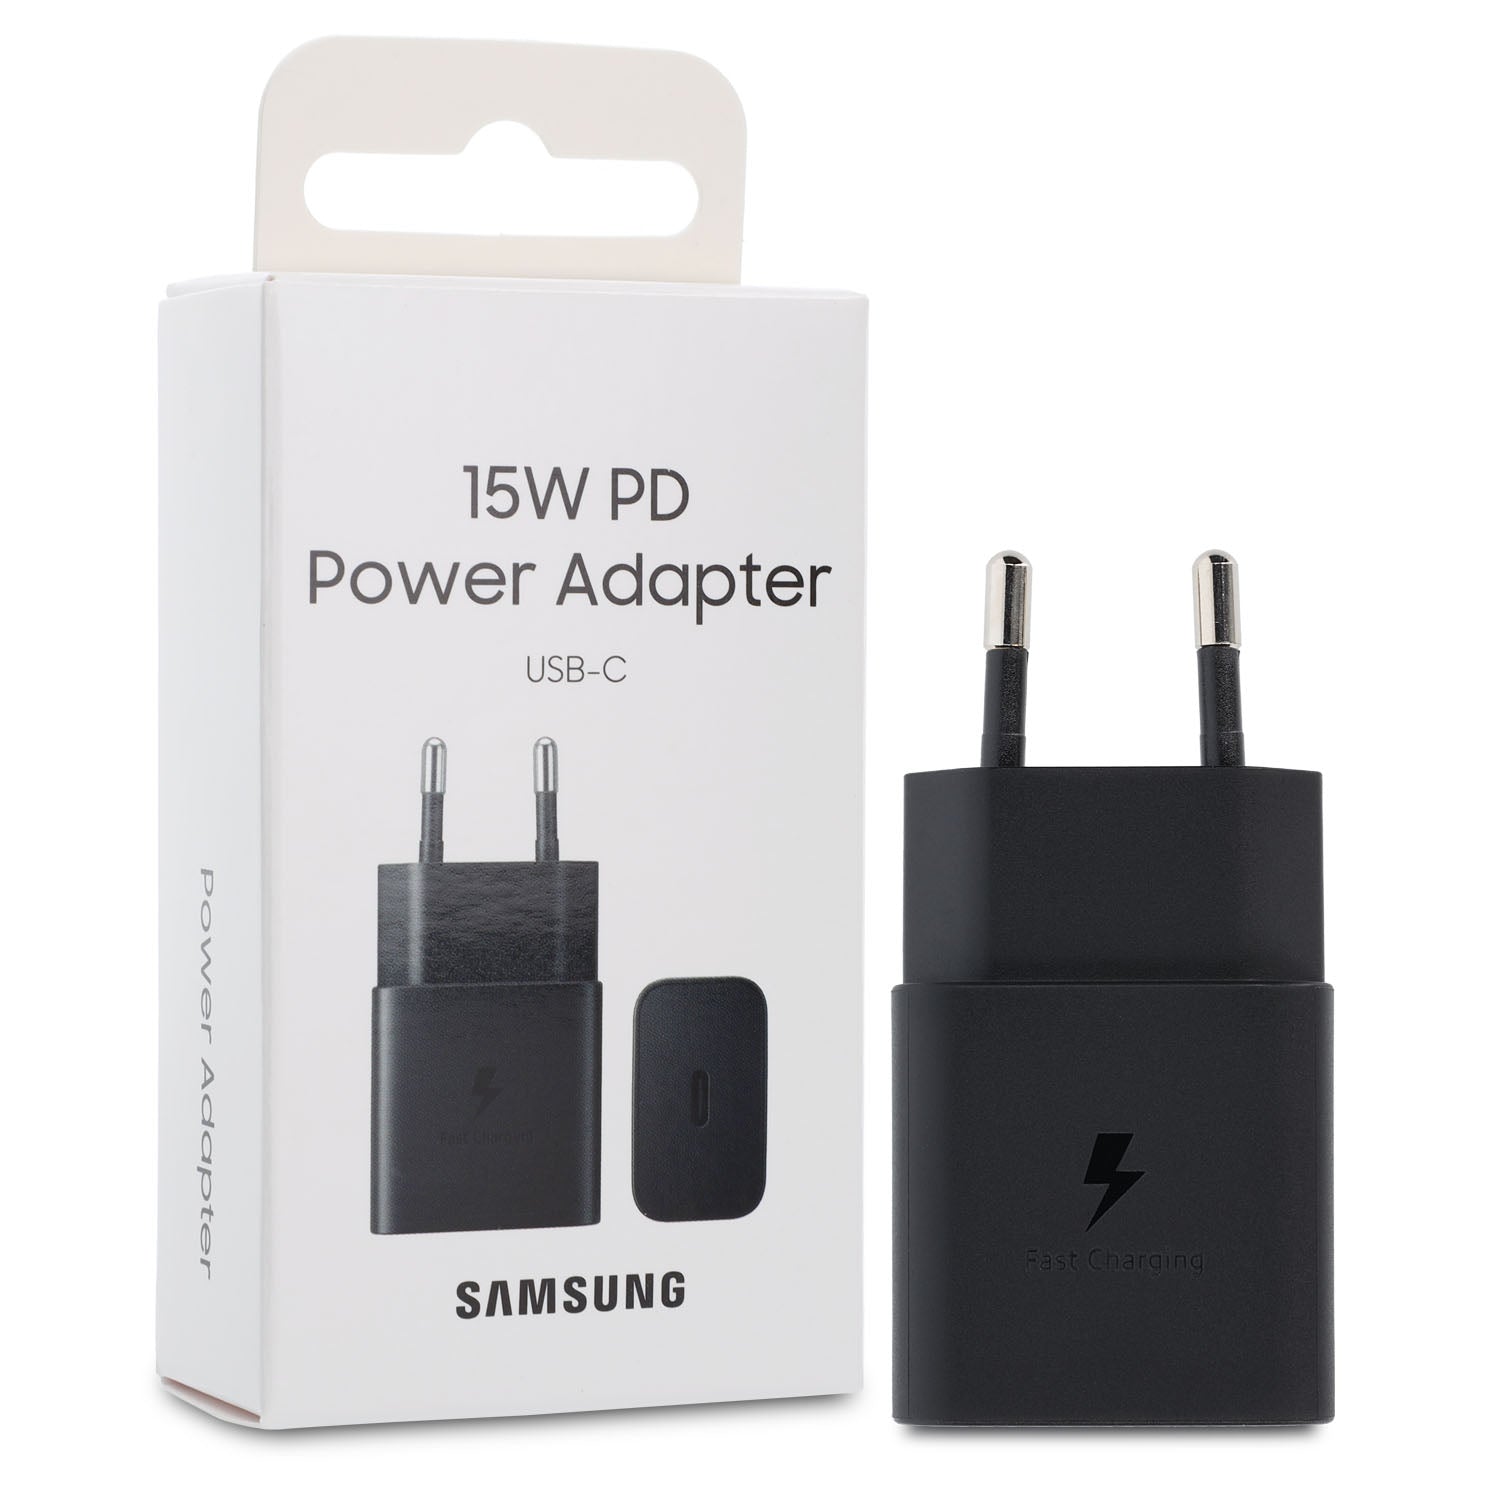 Samsung 15W PD Power Adapter USB-C